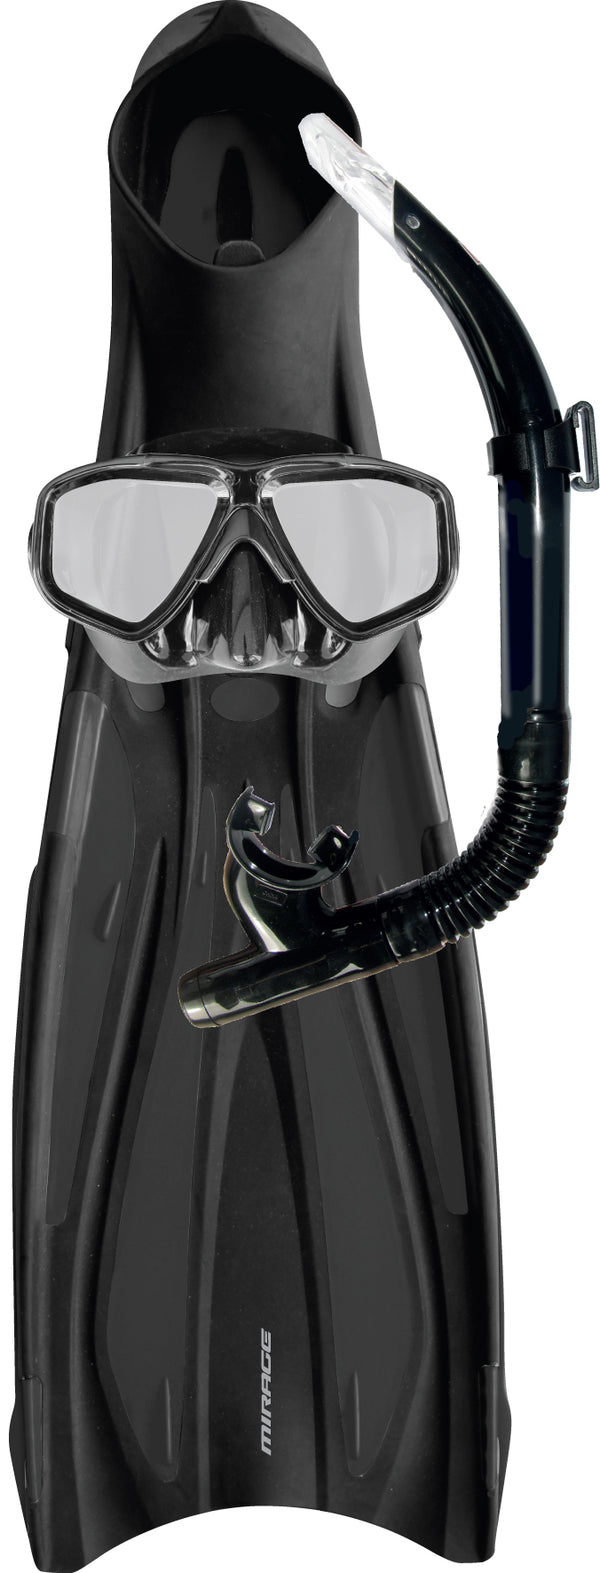 Mirage Barracuda Silicone Mask, Snorkel & Fin Set -Black - S (Adult)